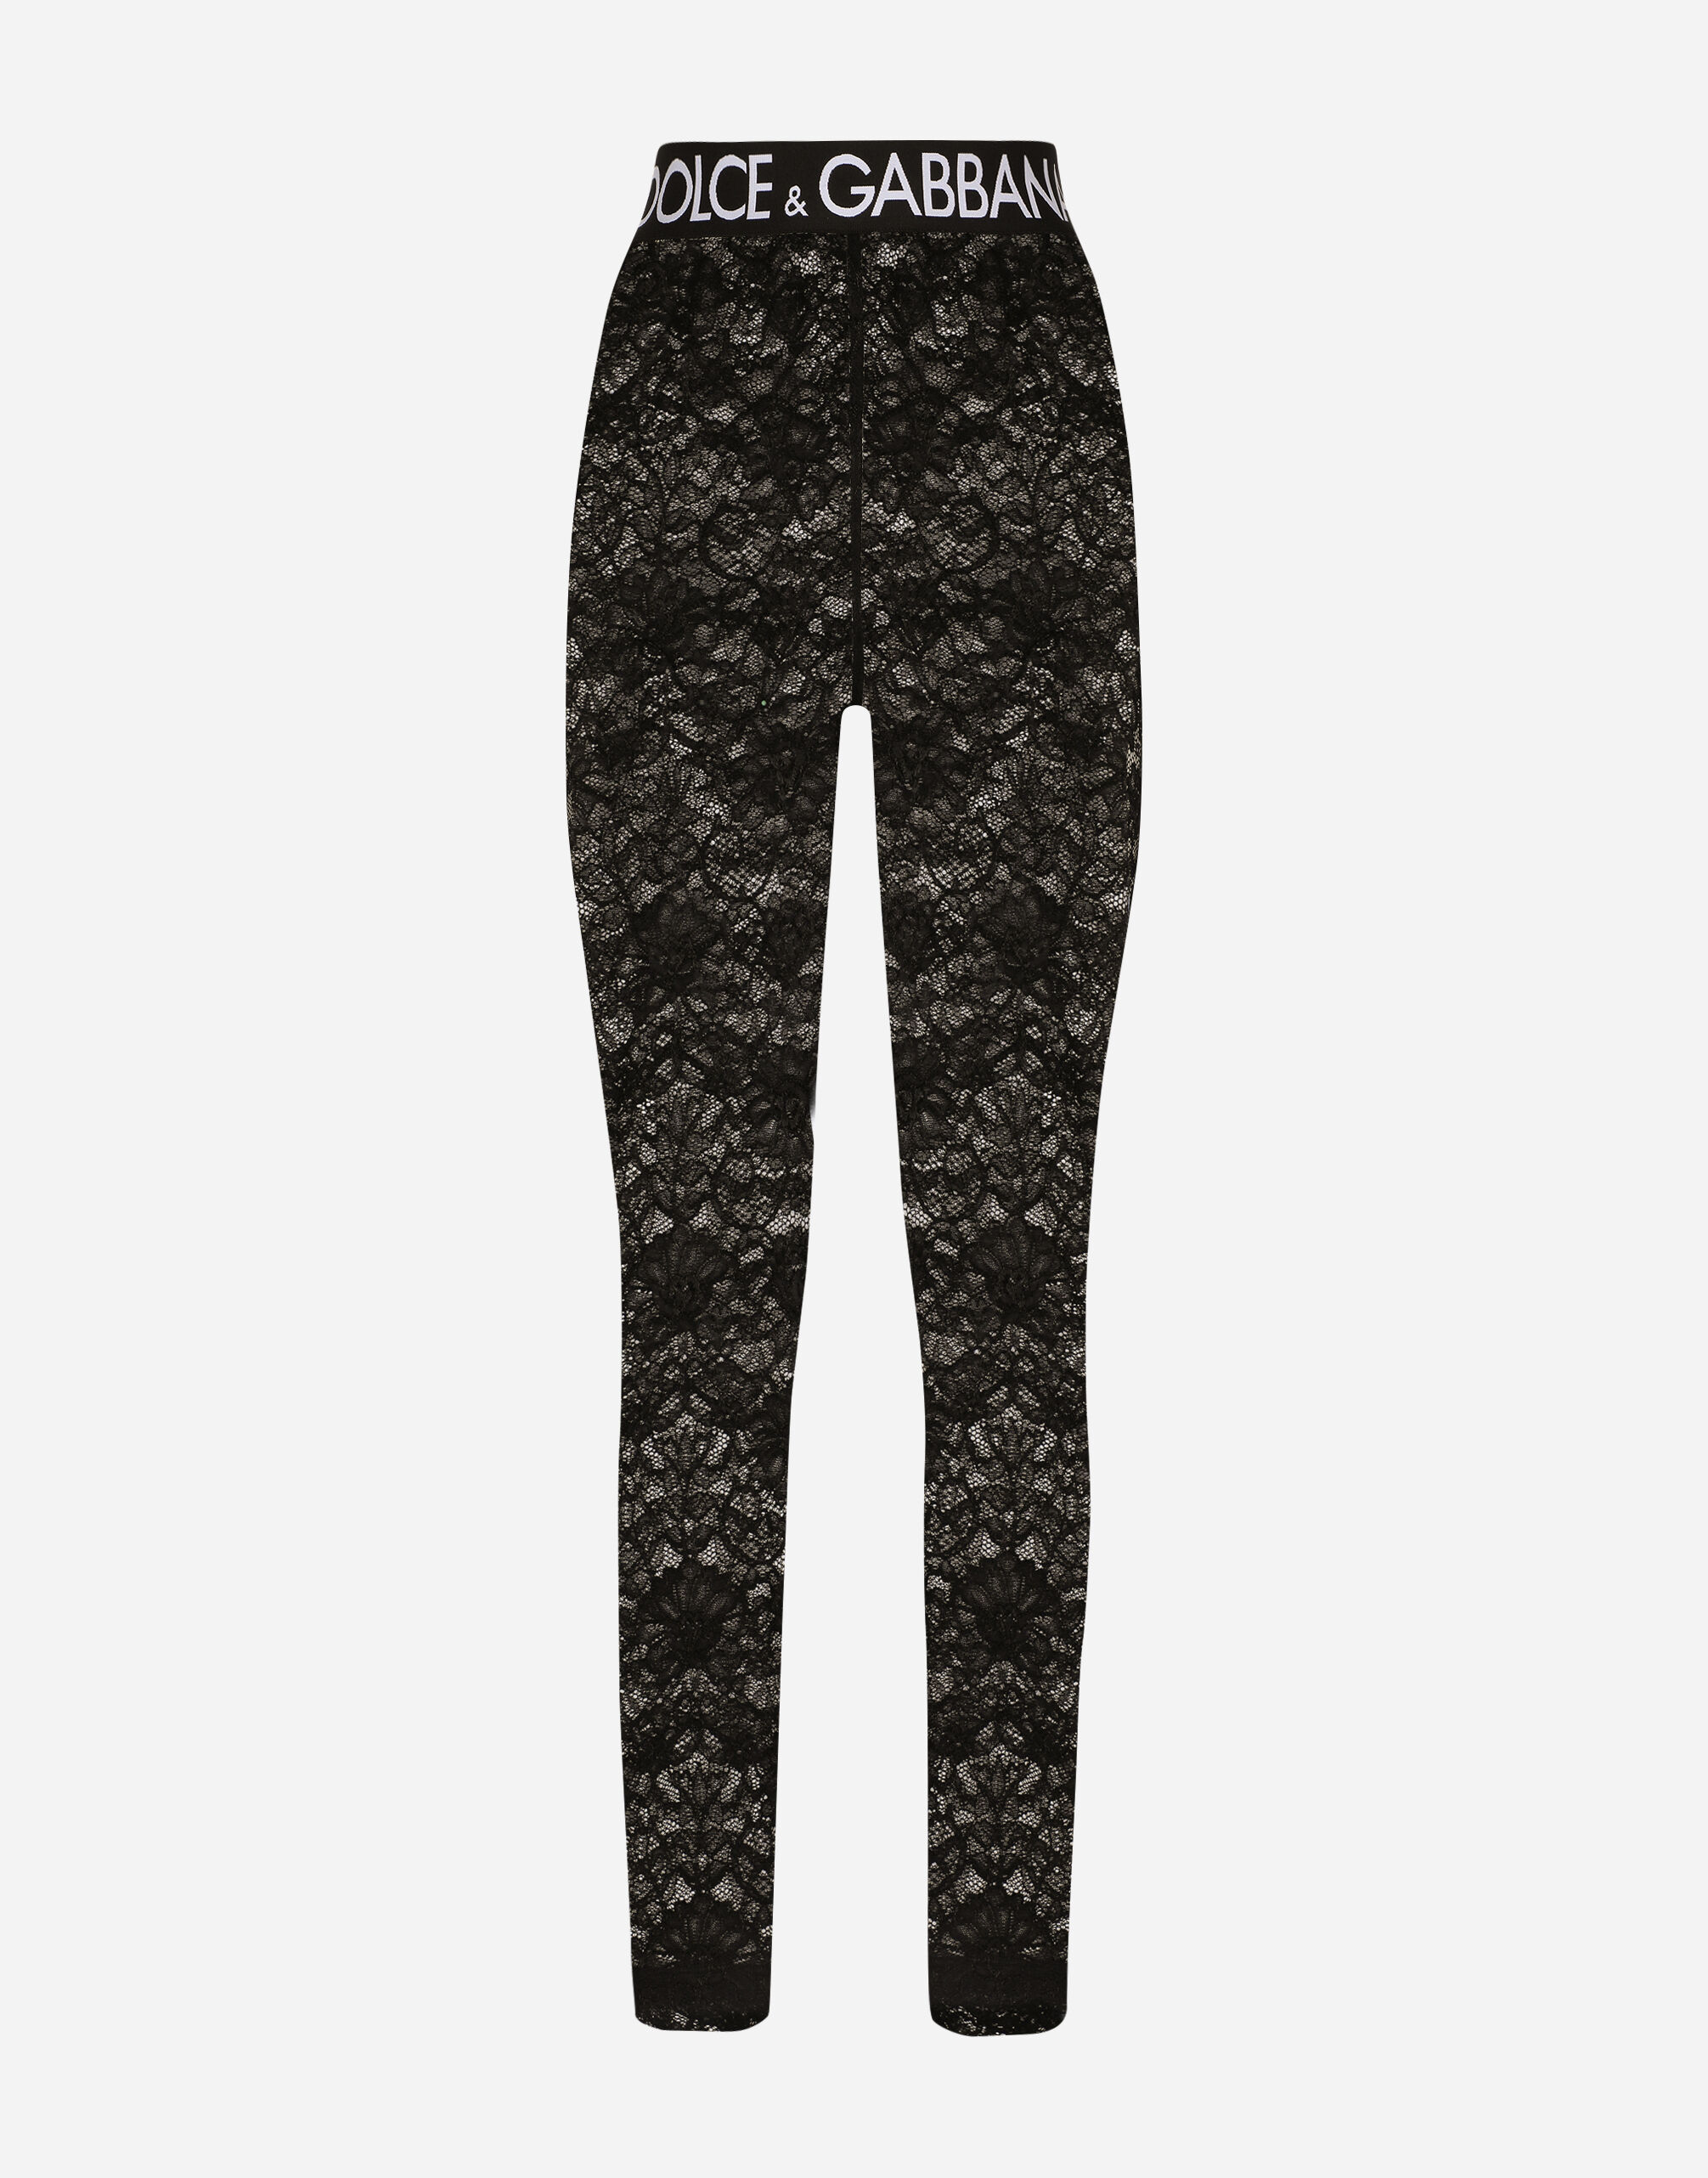 Dolce & Gabbana Wool Skinny Dress Pants in Black for Men | Lyst UK